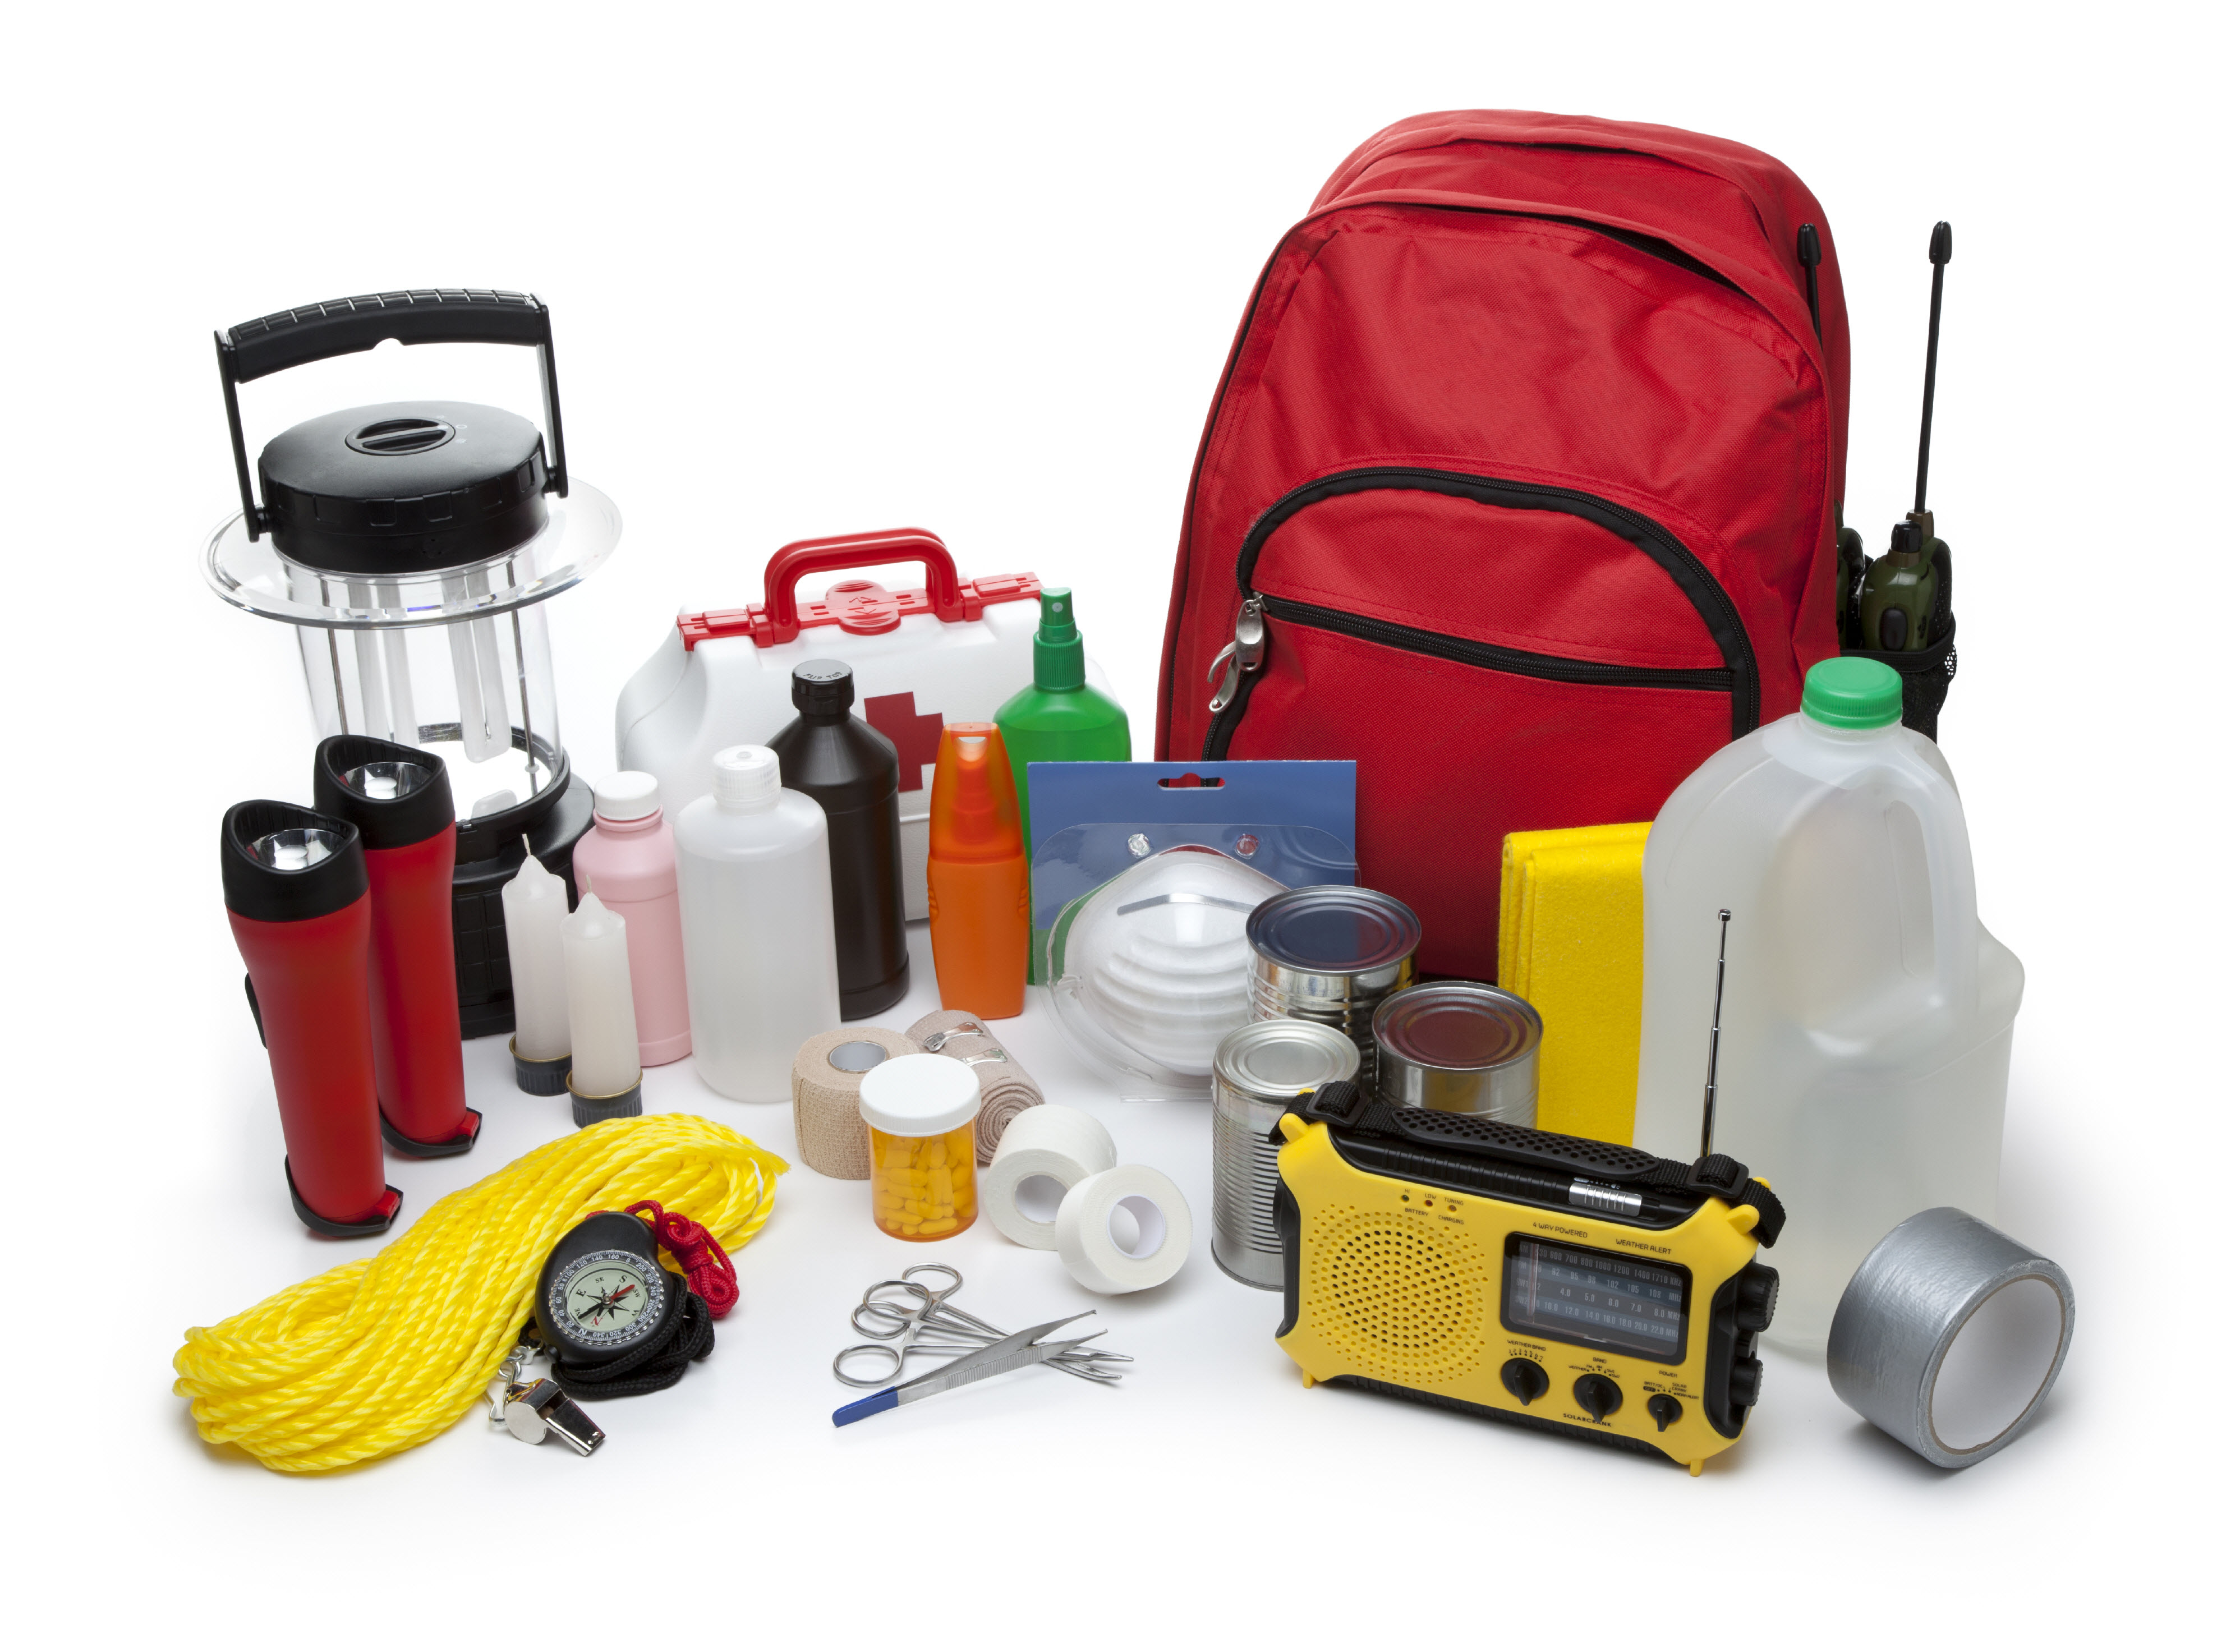 disaster survival kit